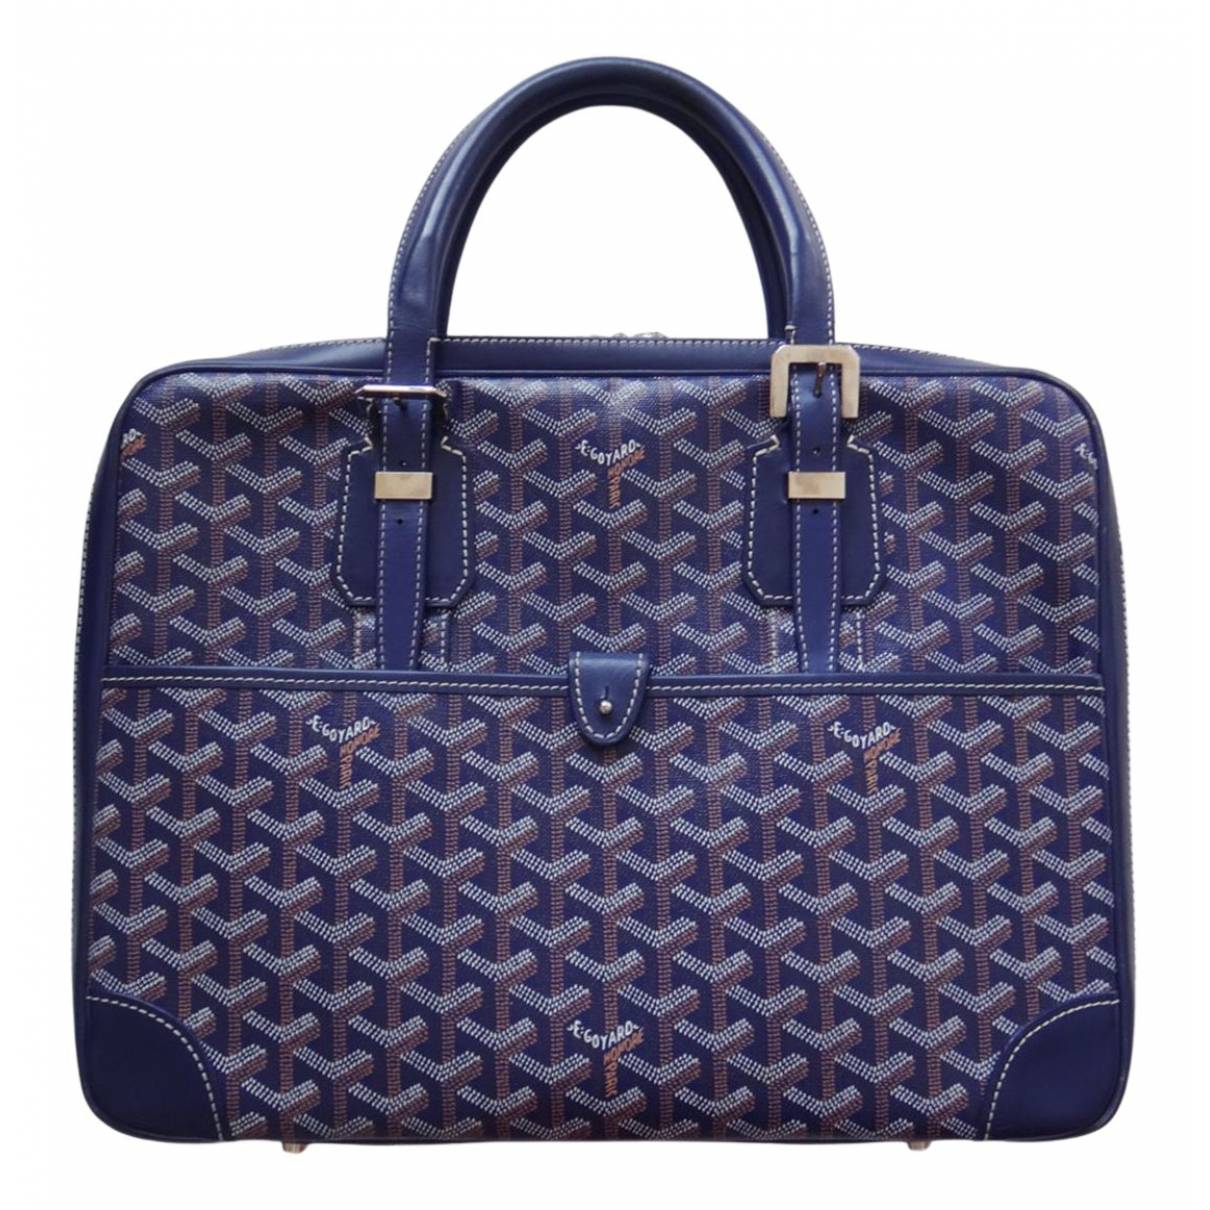 Anjou leather handbag Goyard Navy in Leather - 36409174